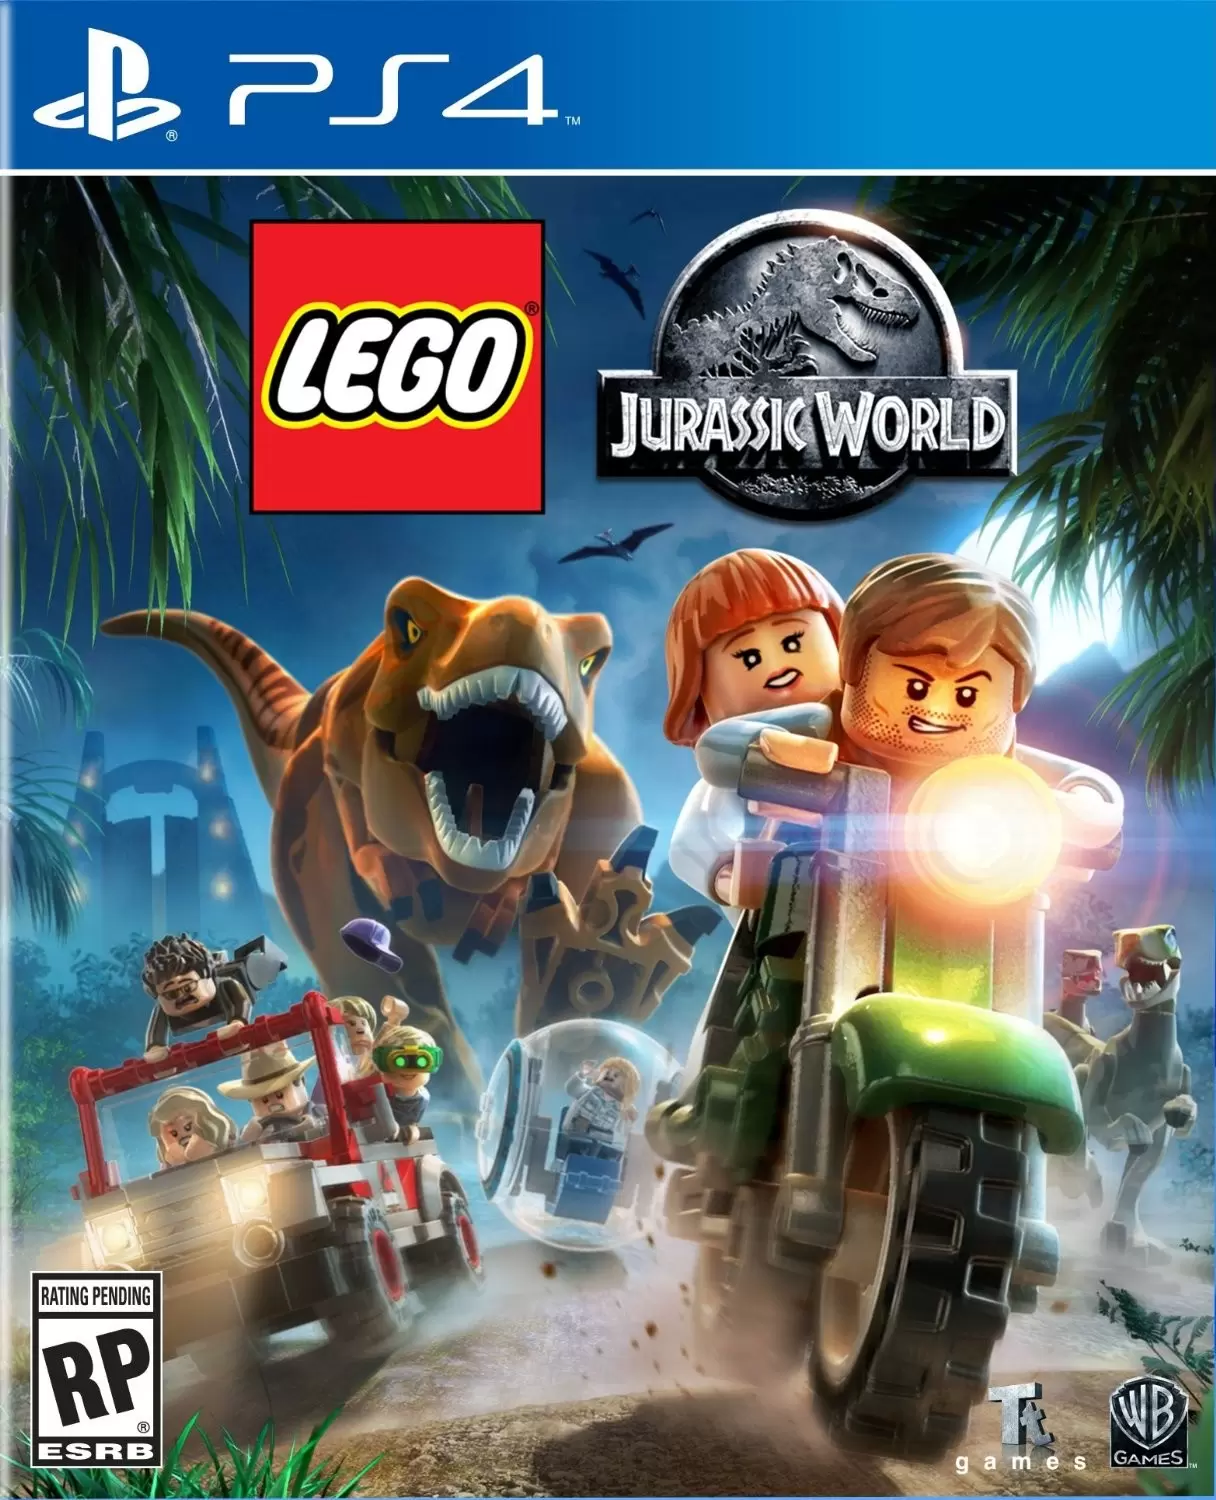 PS4 Games - LEGO Jurassic World